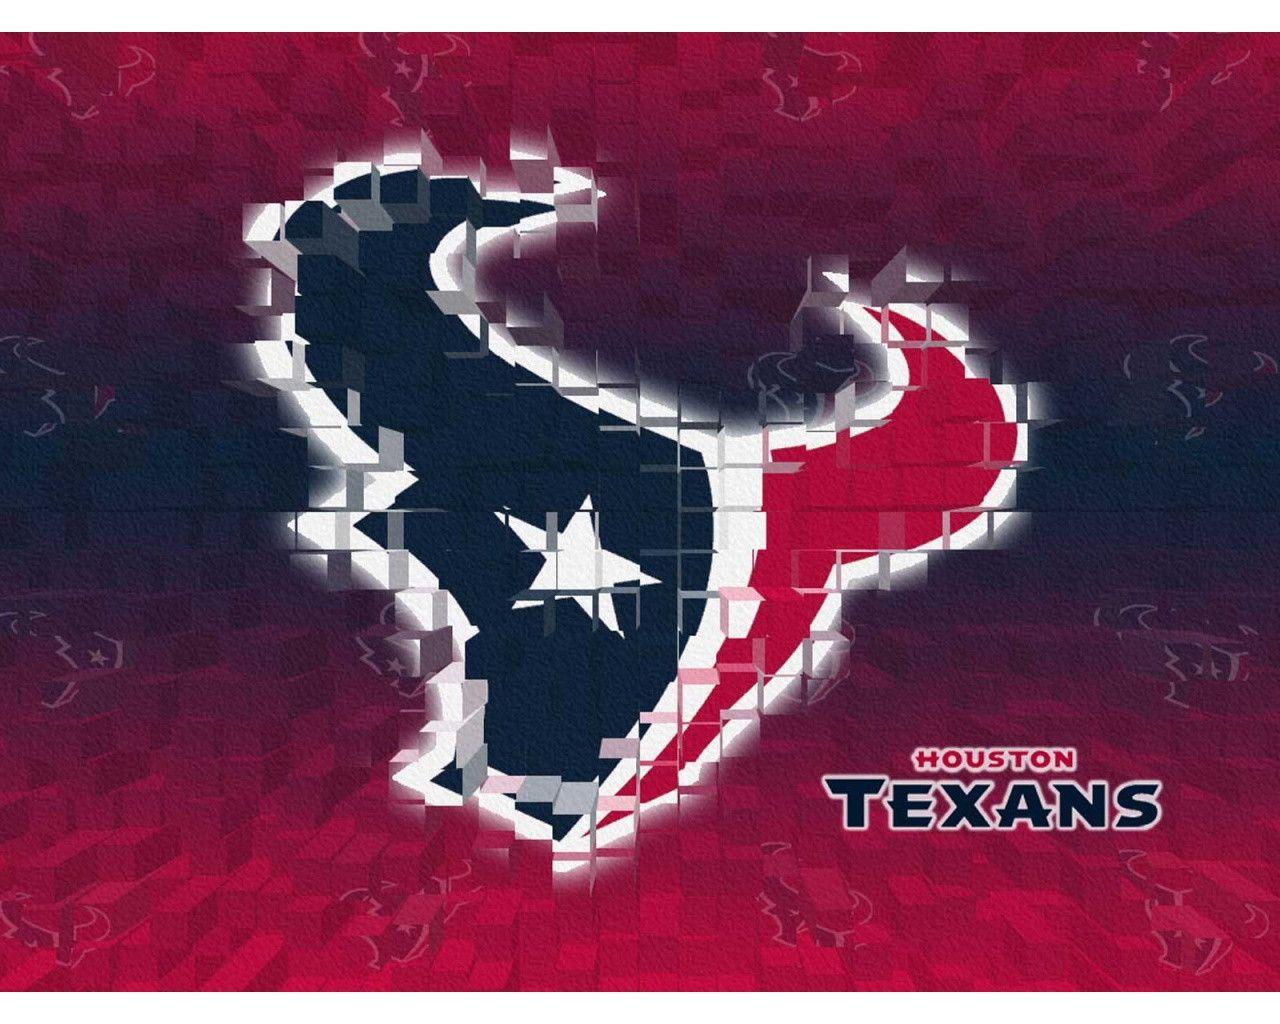 Houston texans d wallpapers